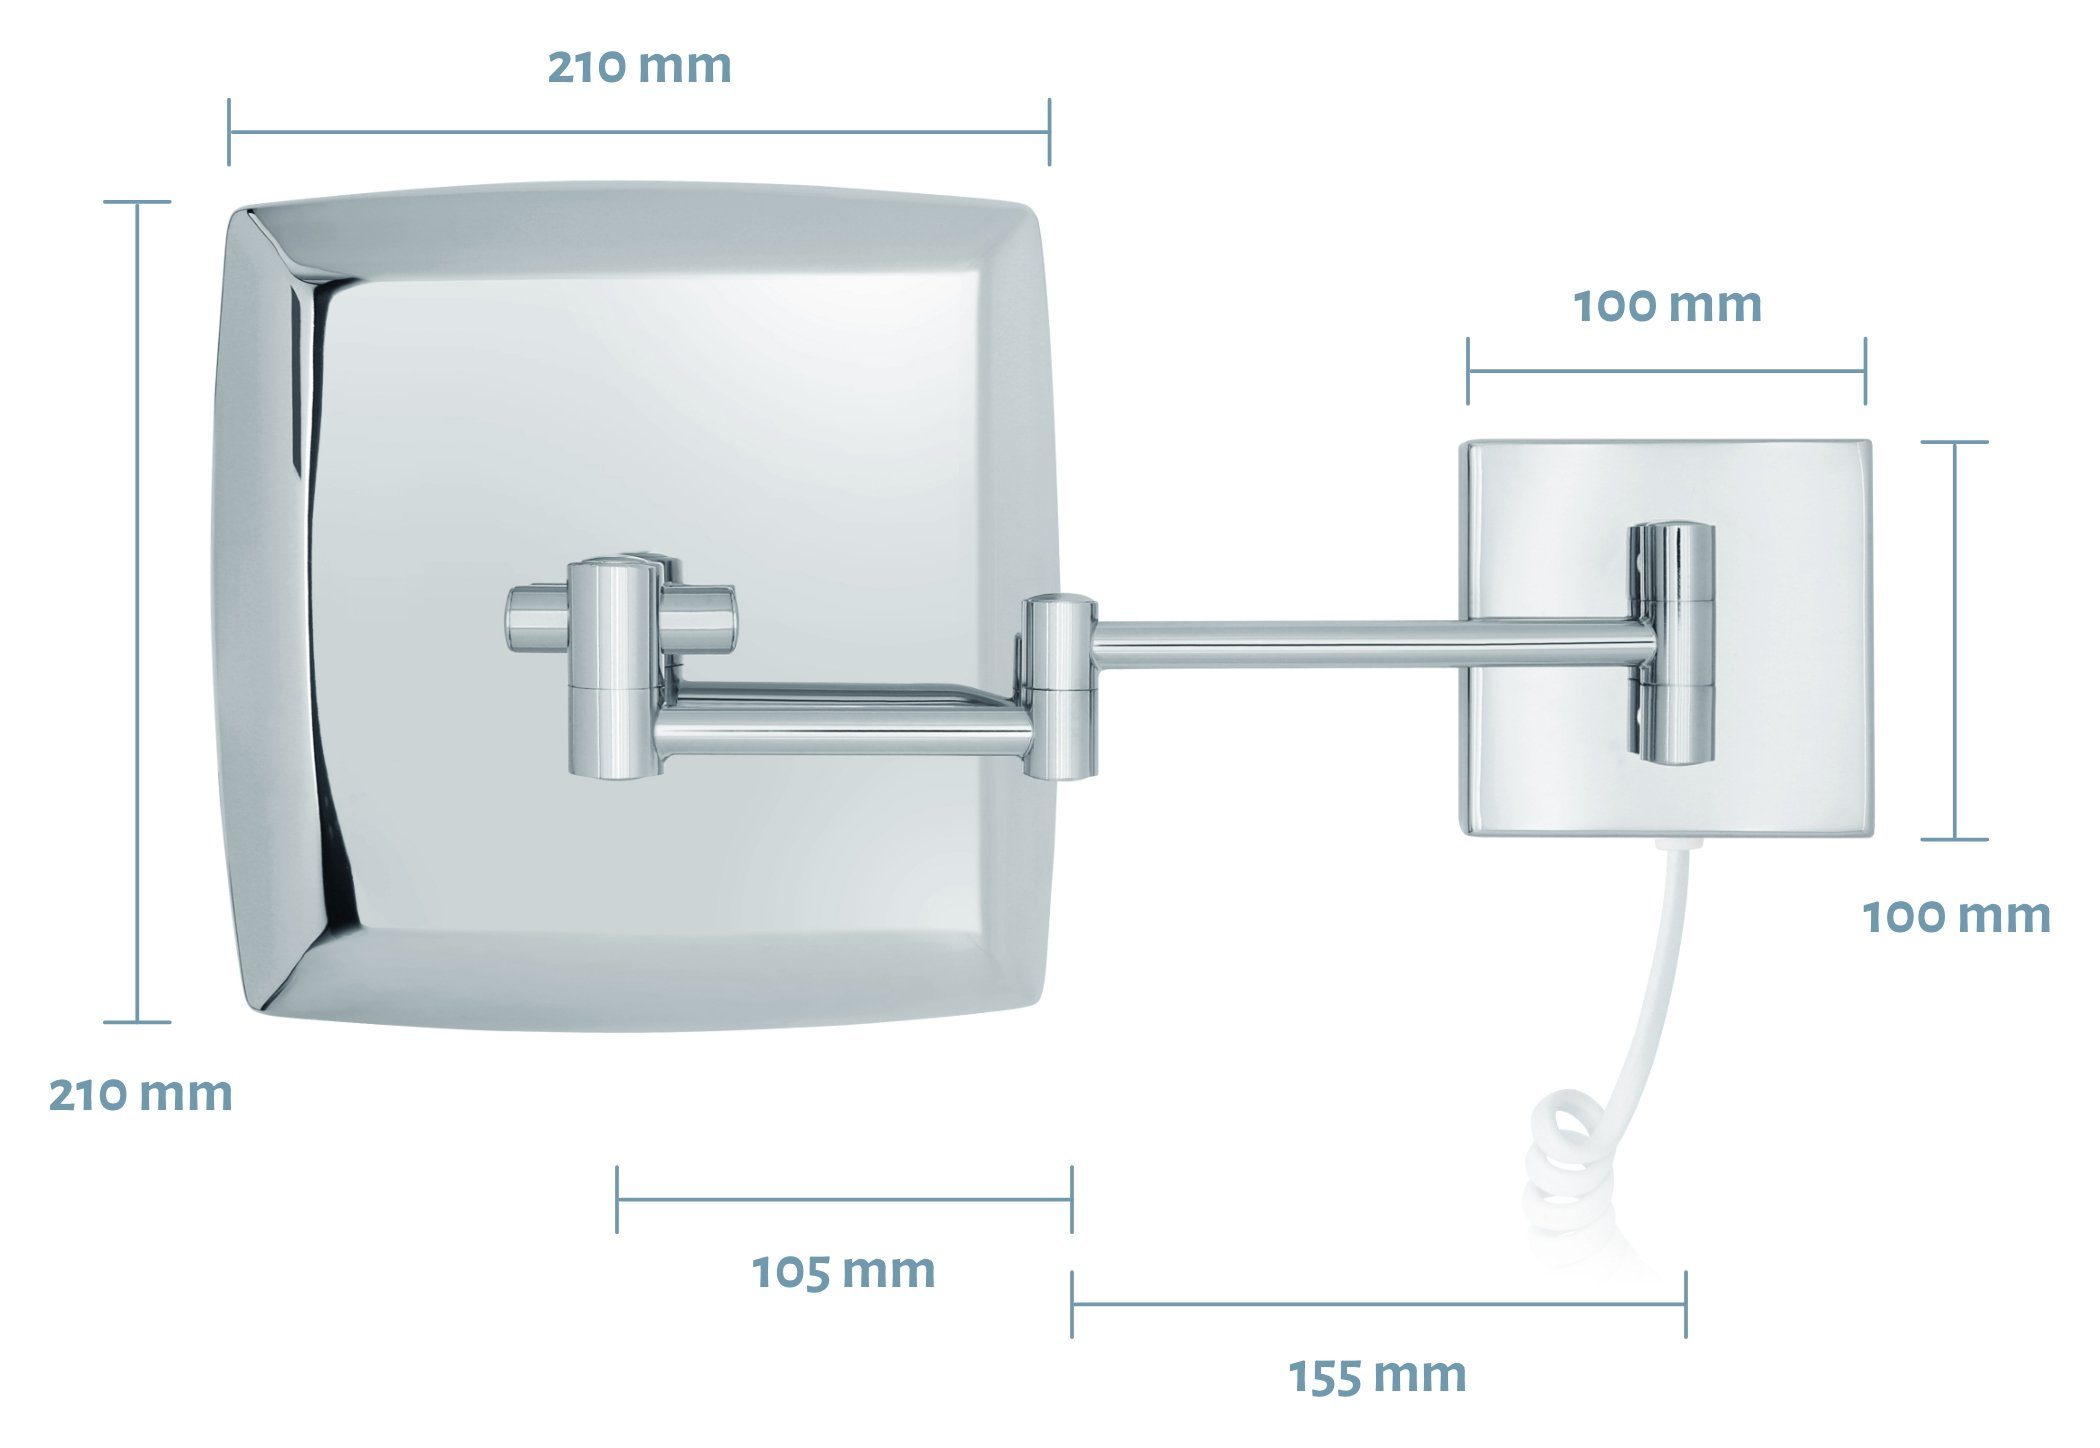 LED 5fach weißes Kosmetikspiegel Vergrößerungsspiegel Kabel Kosmetikspiegel Verona, Sensor Libaro